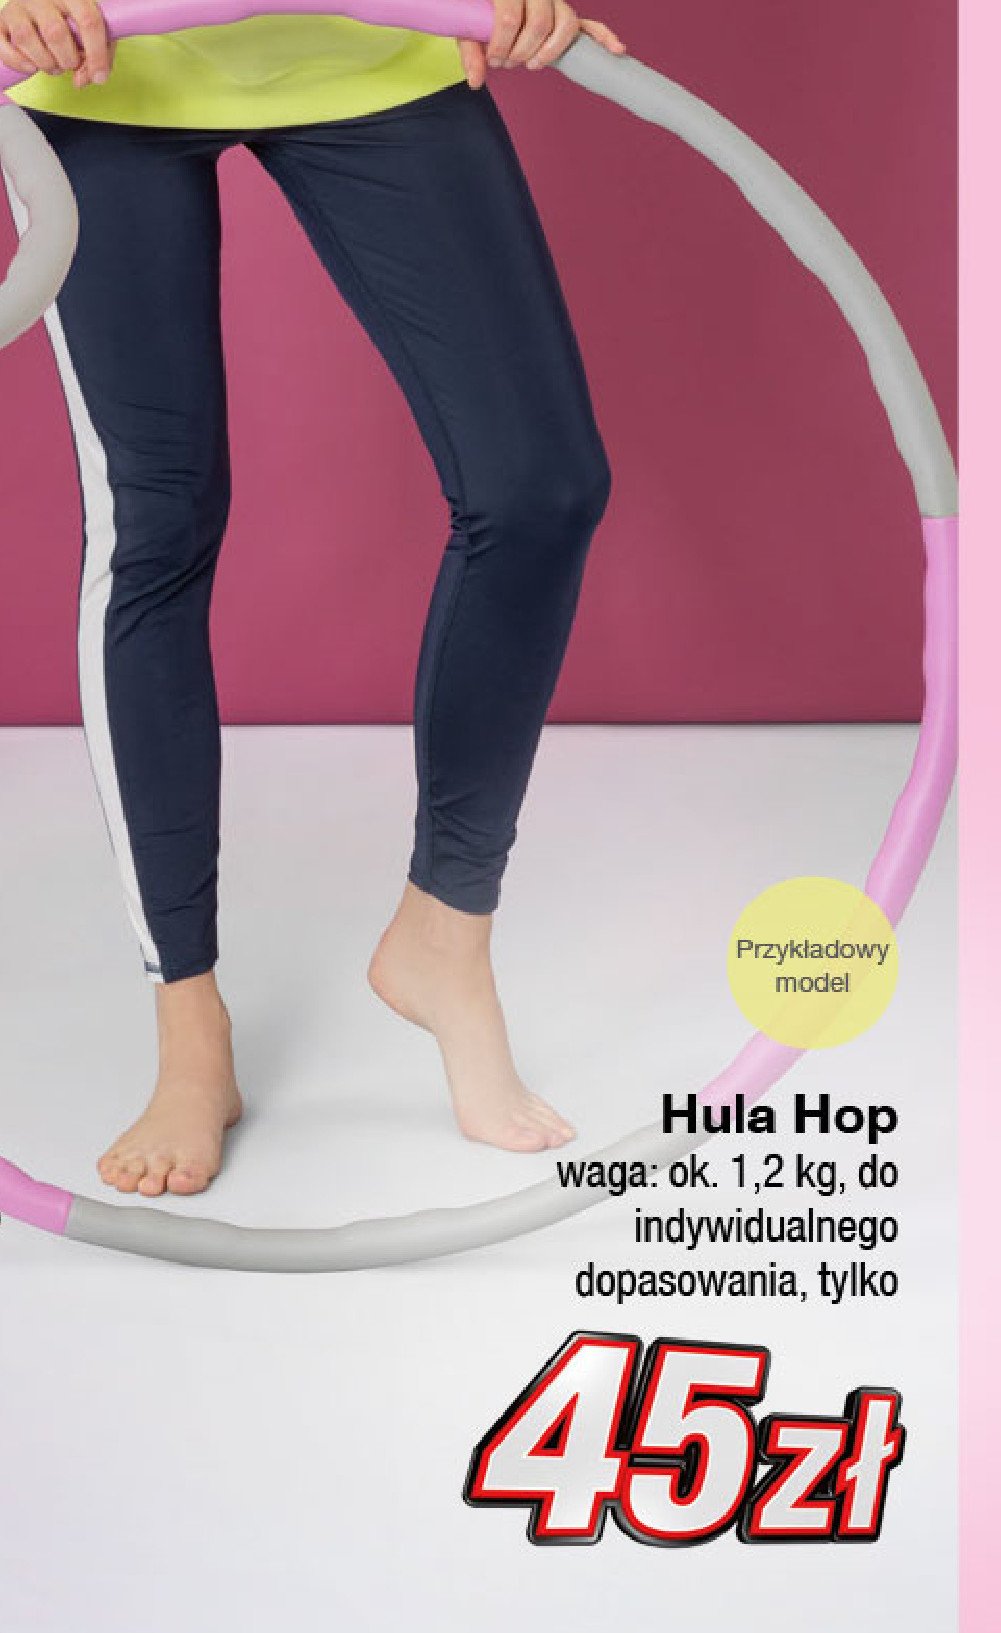 Hula hop promocja